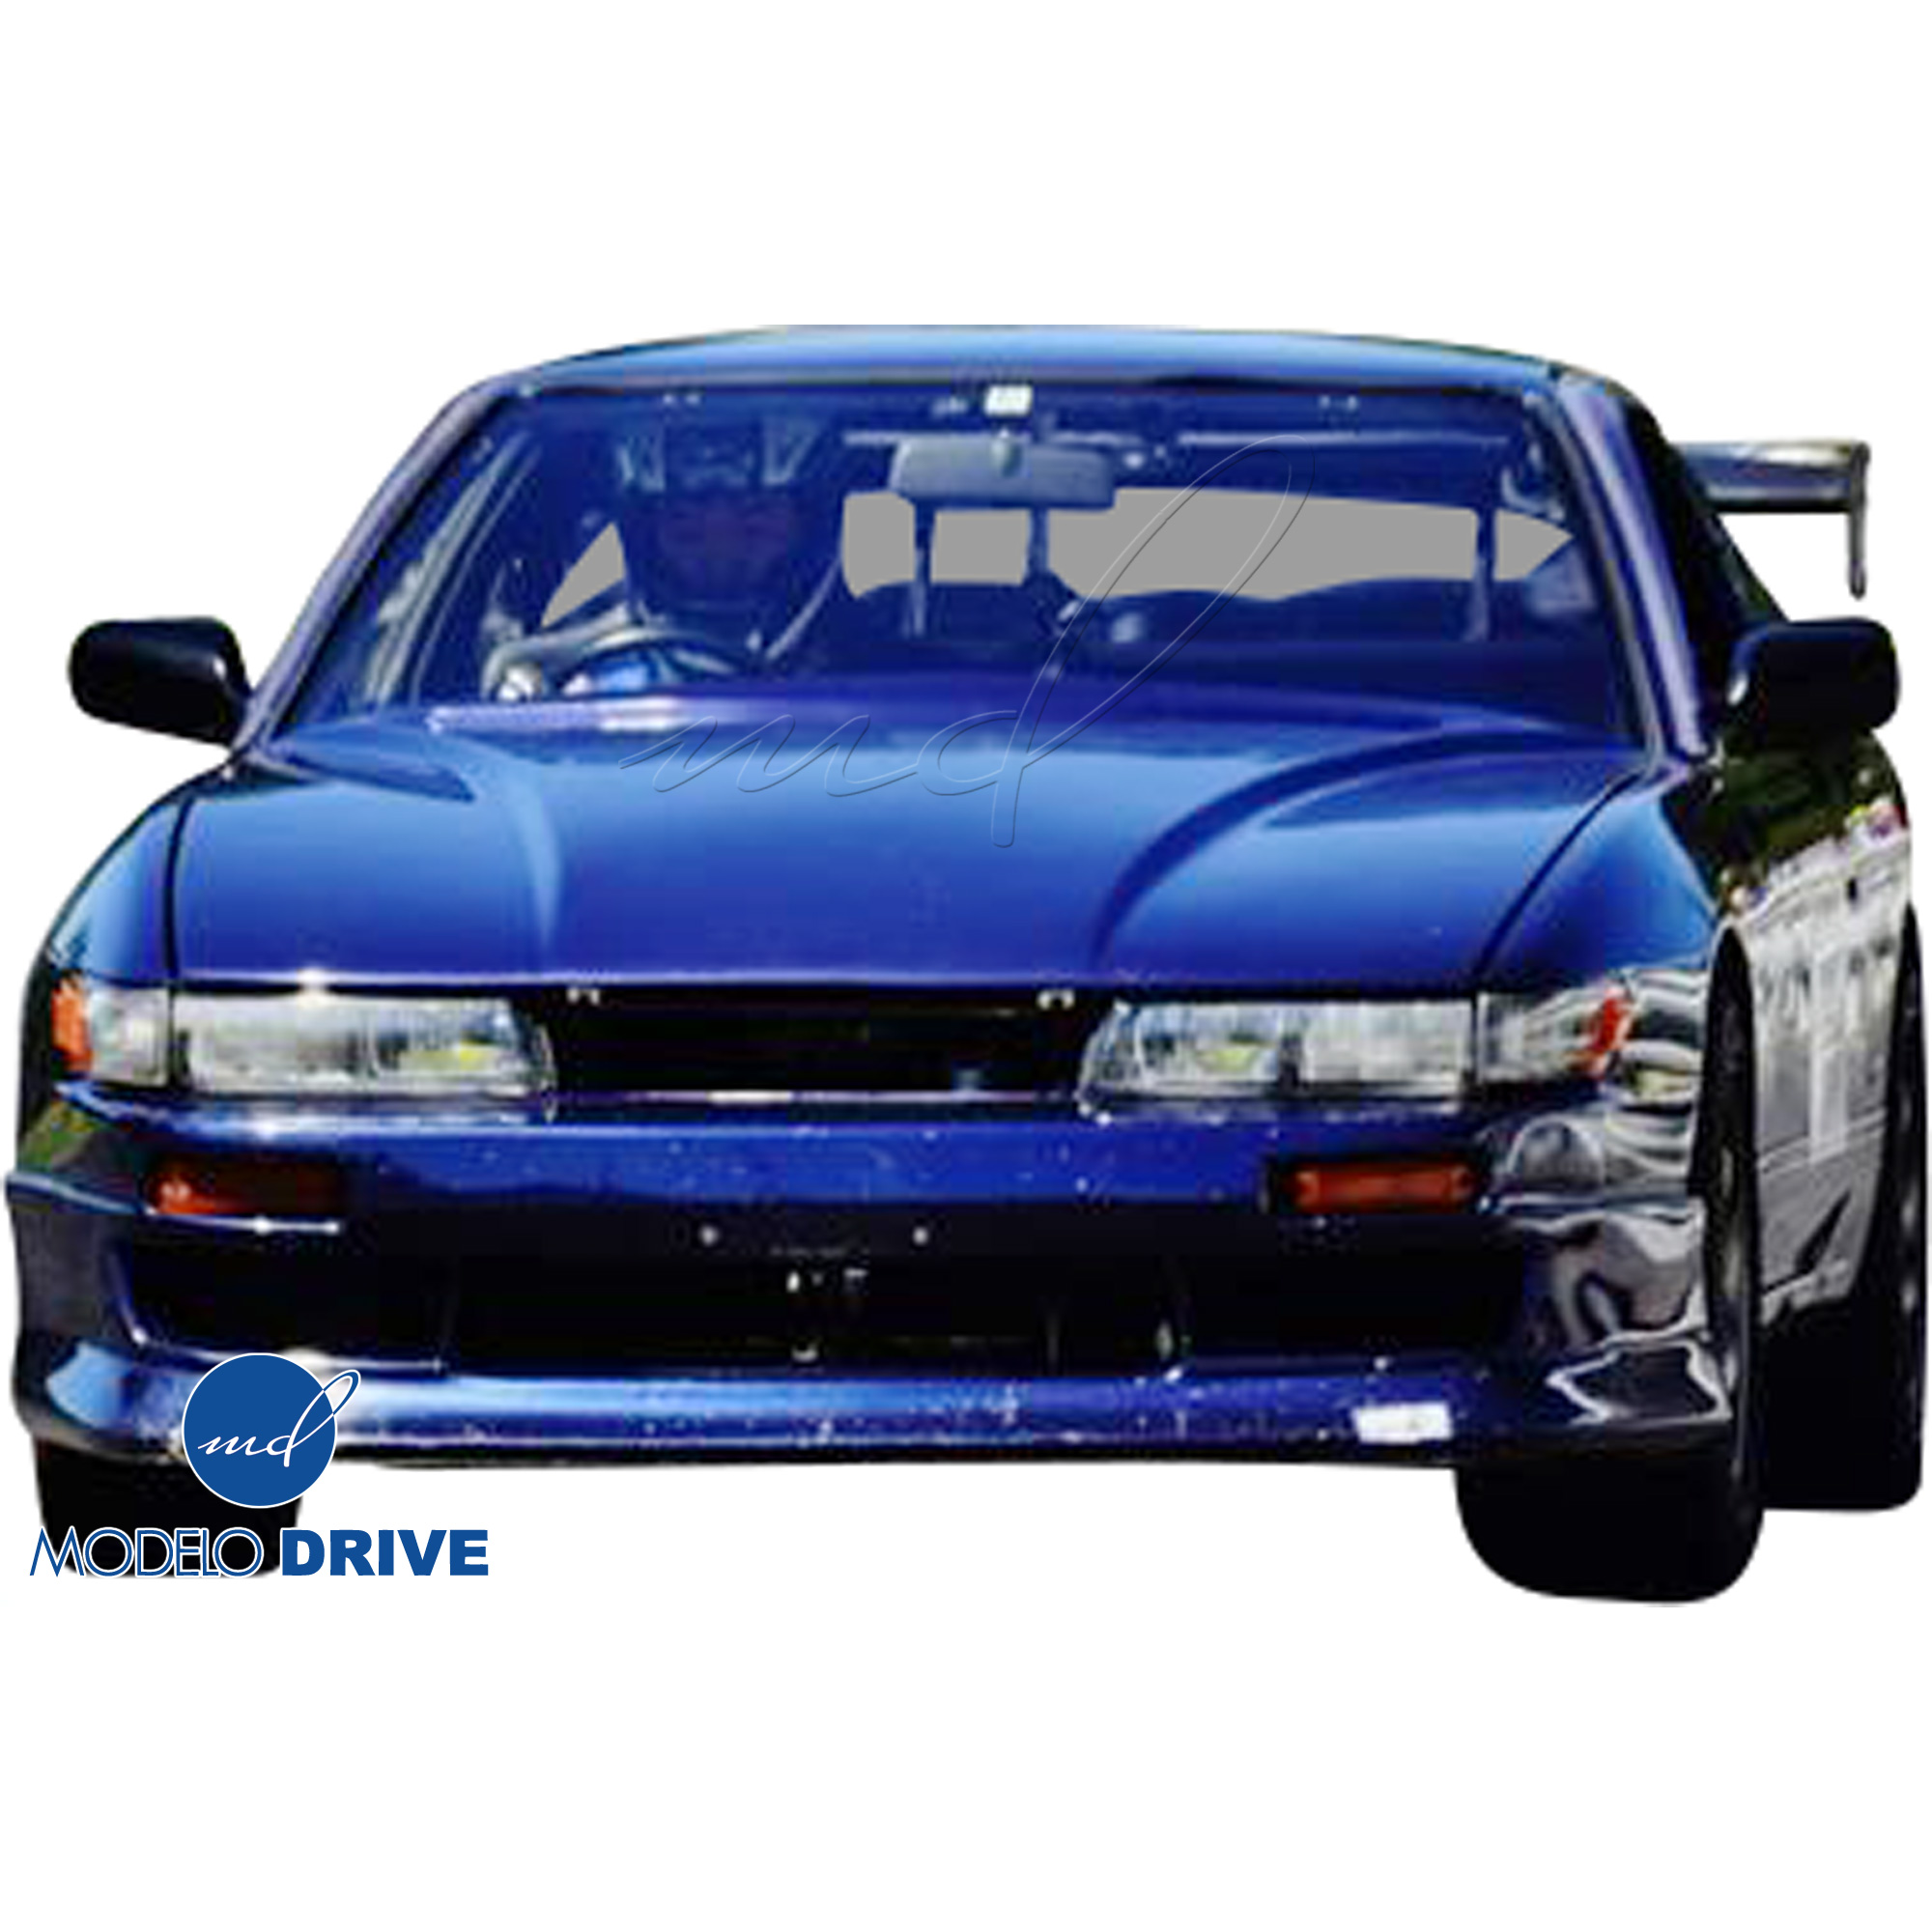 ModeloDrive FRP ORI v2 Hood > Nissan Silvia S13 1989-1994 - Image 22